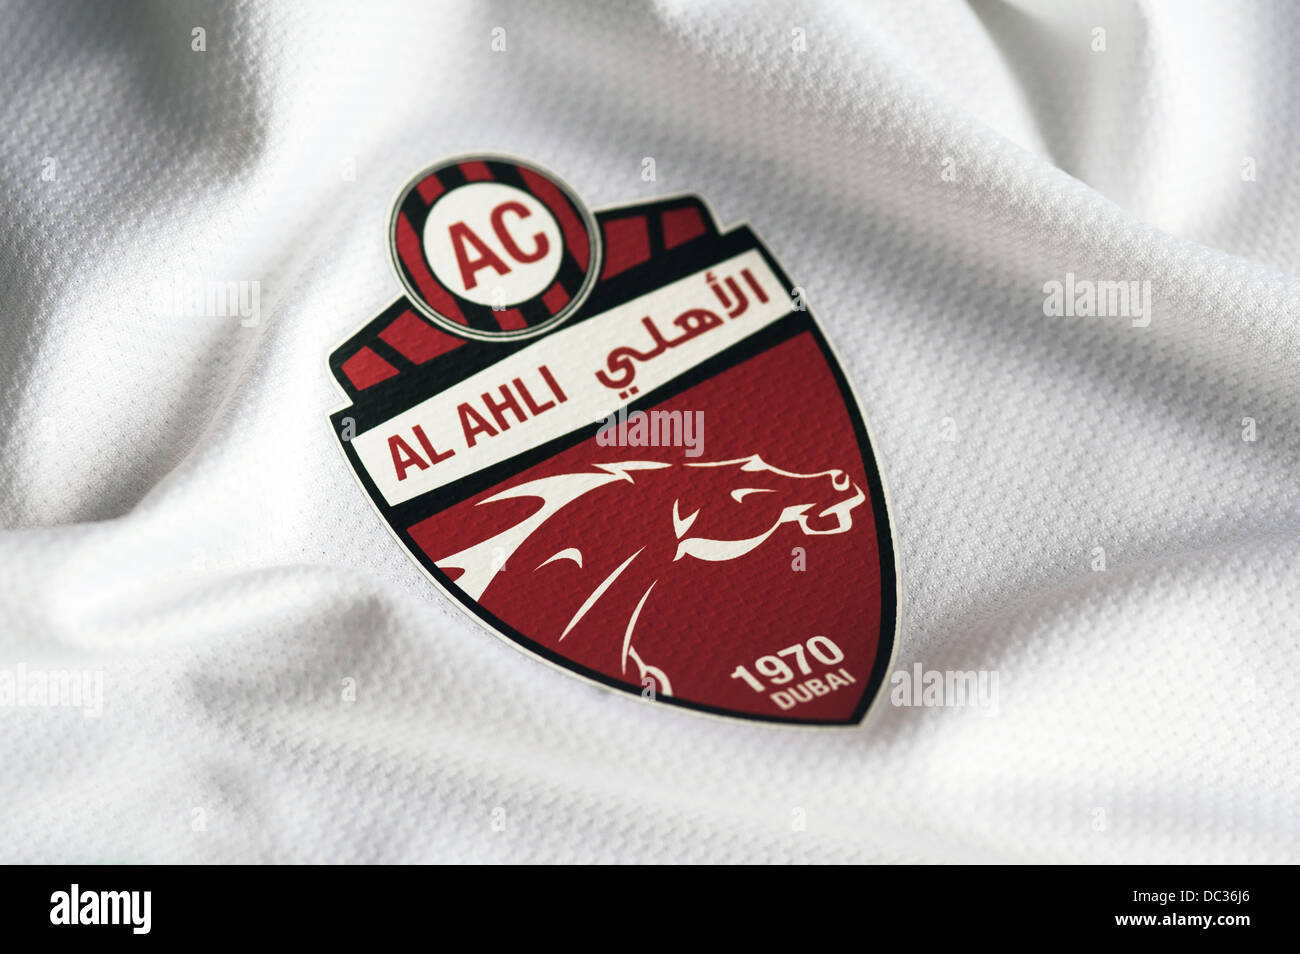 Al Ahli Club Emblem Stock Photo